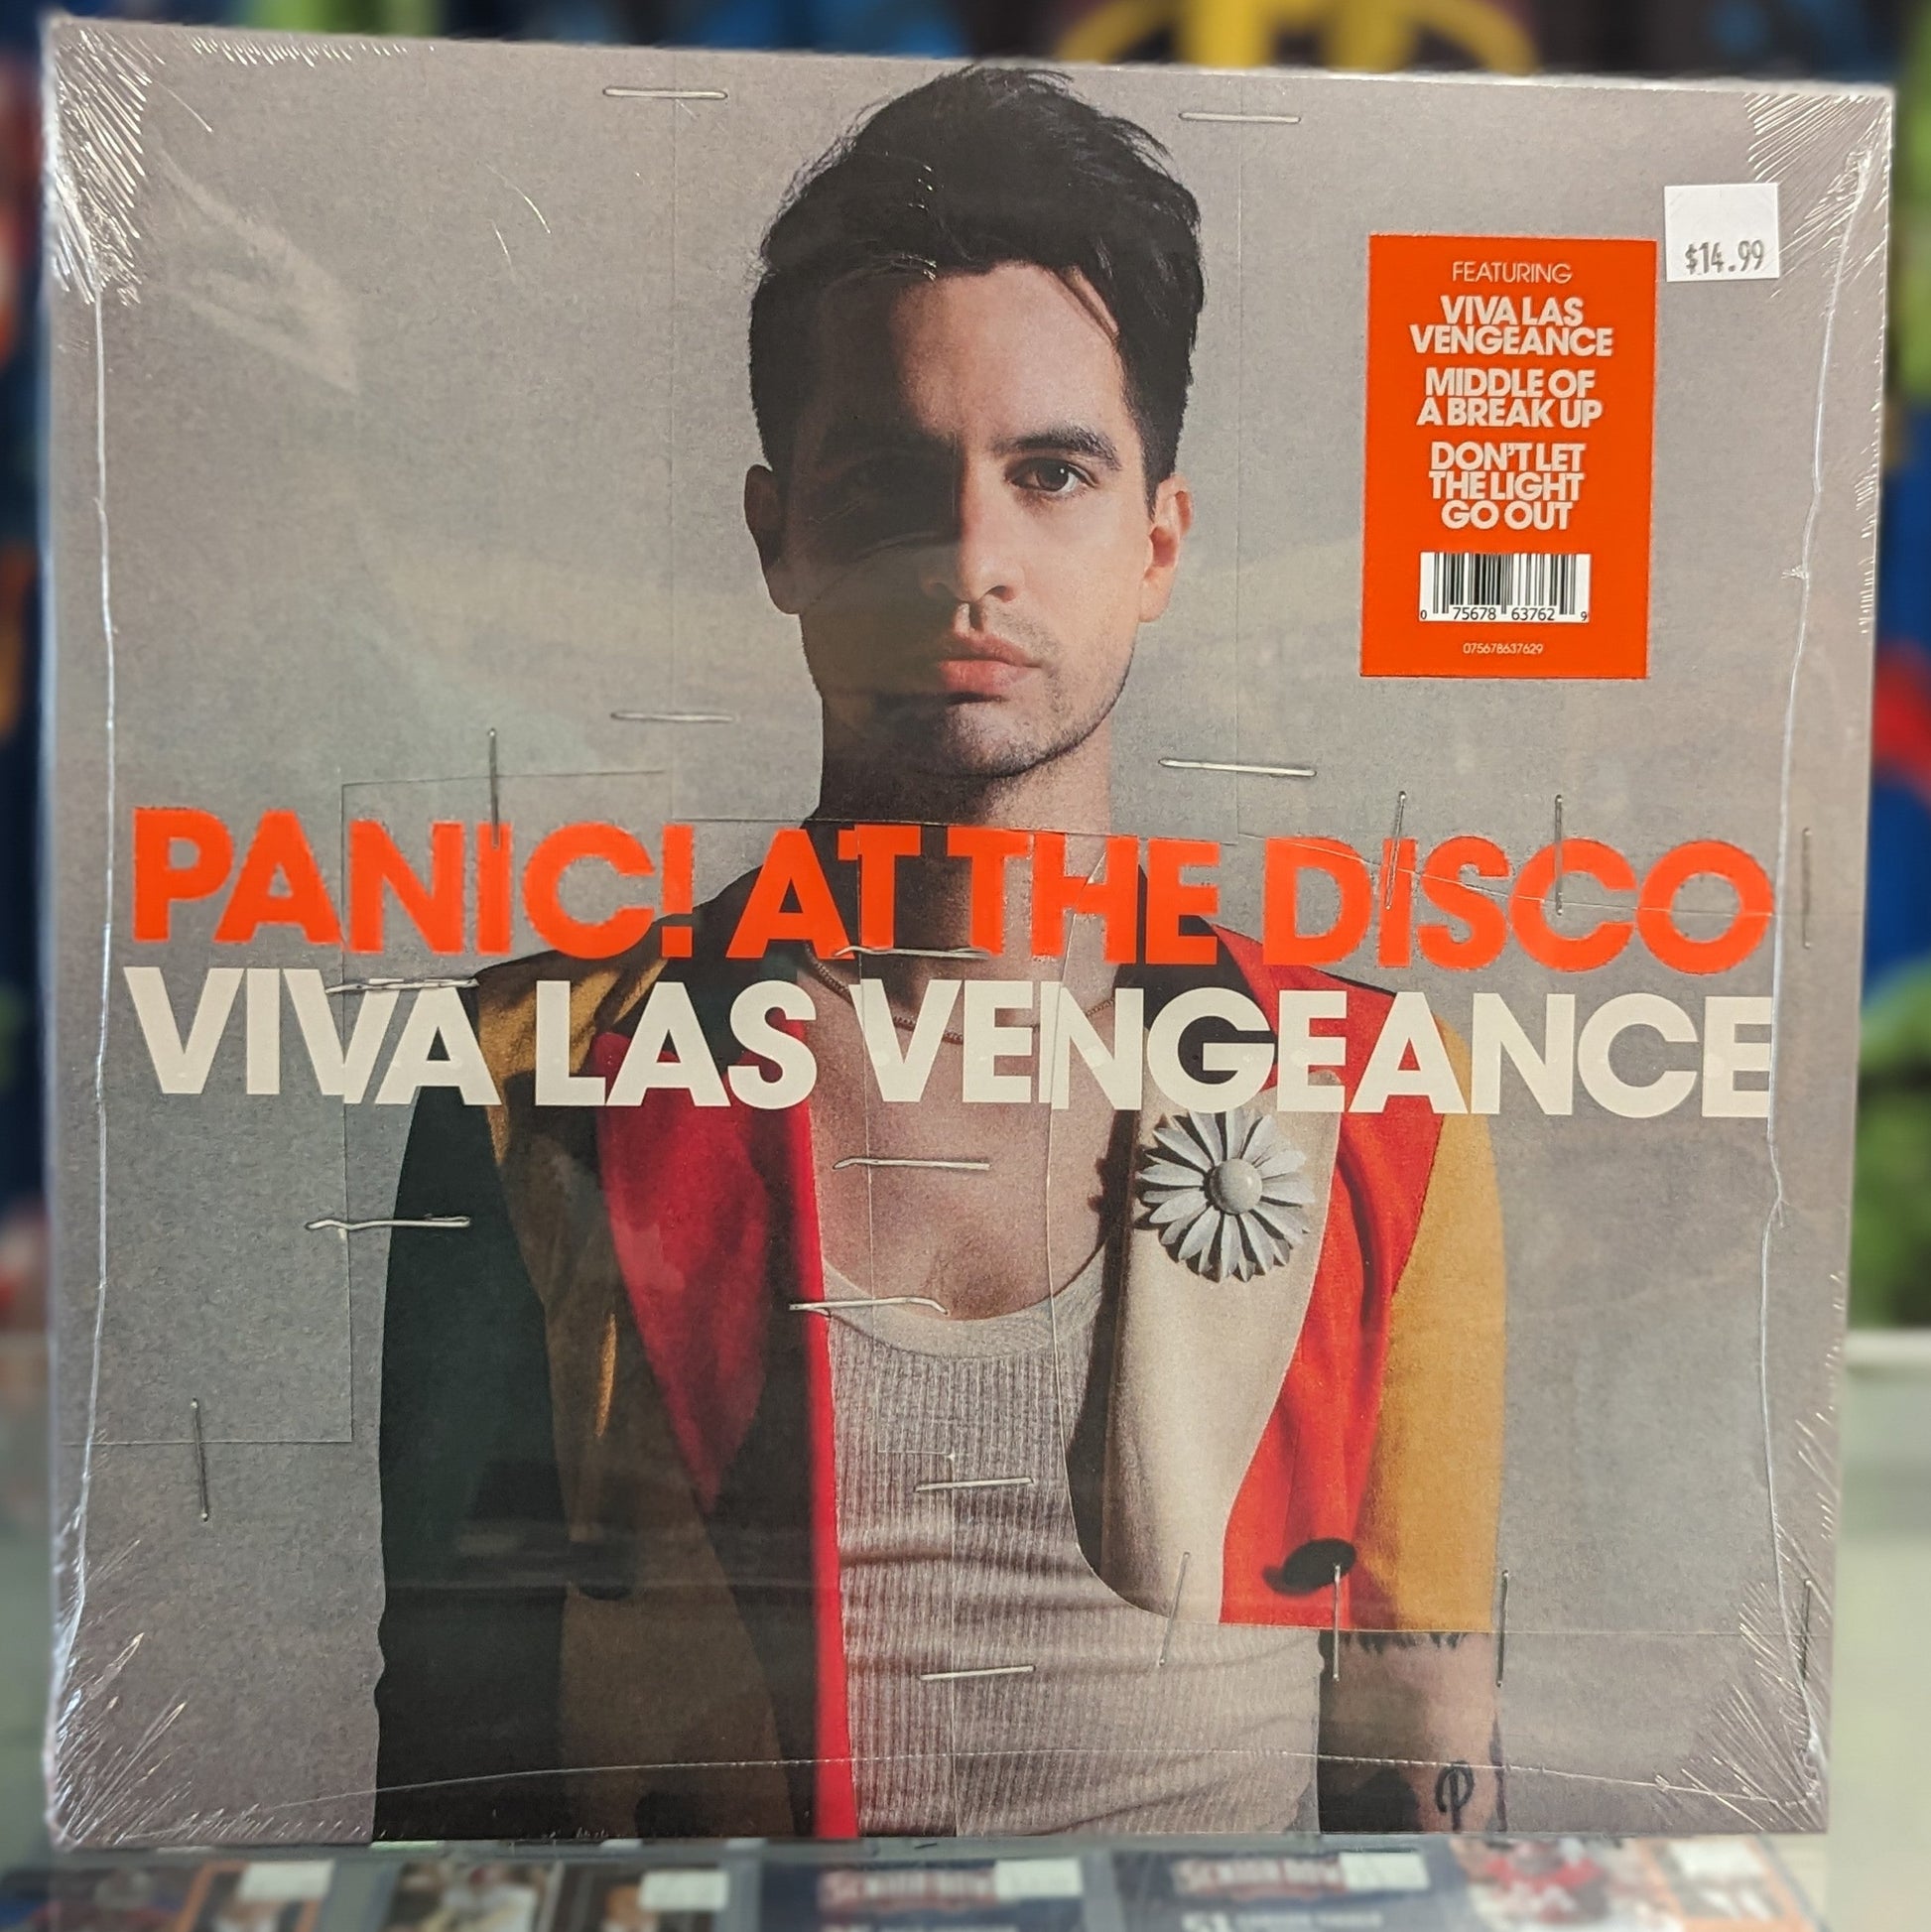 Panic St The Disco "Viva Las Vengeance" Vinyl Record - Covert Comics and Collectibles